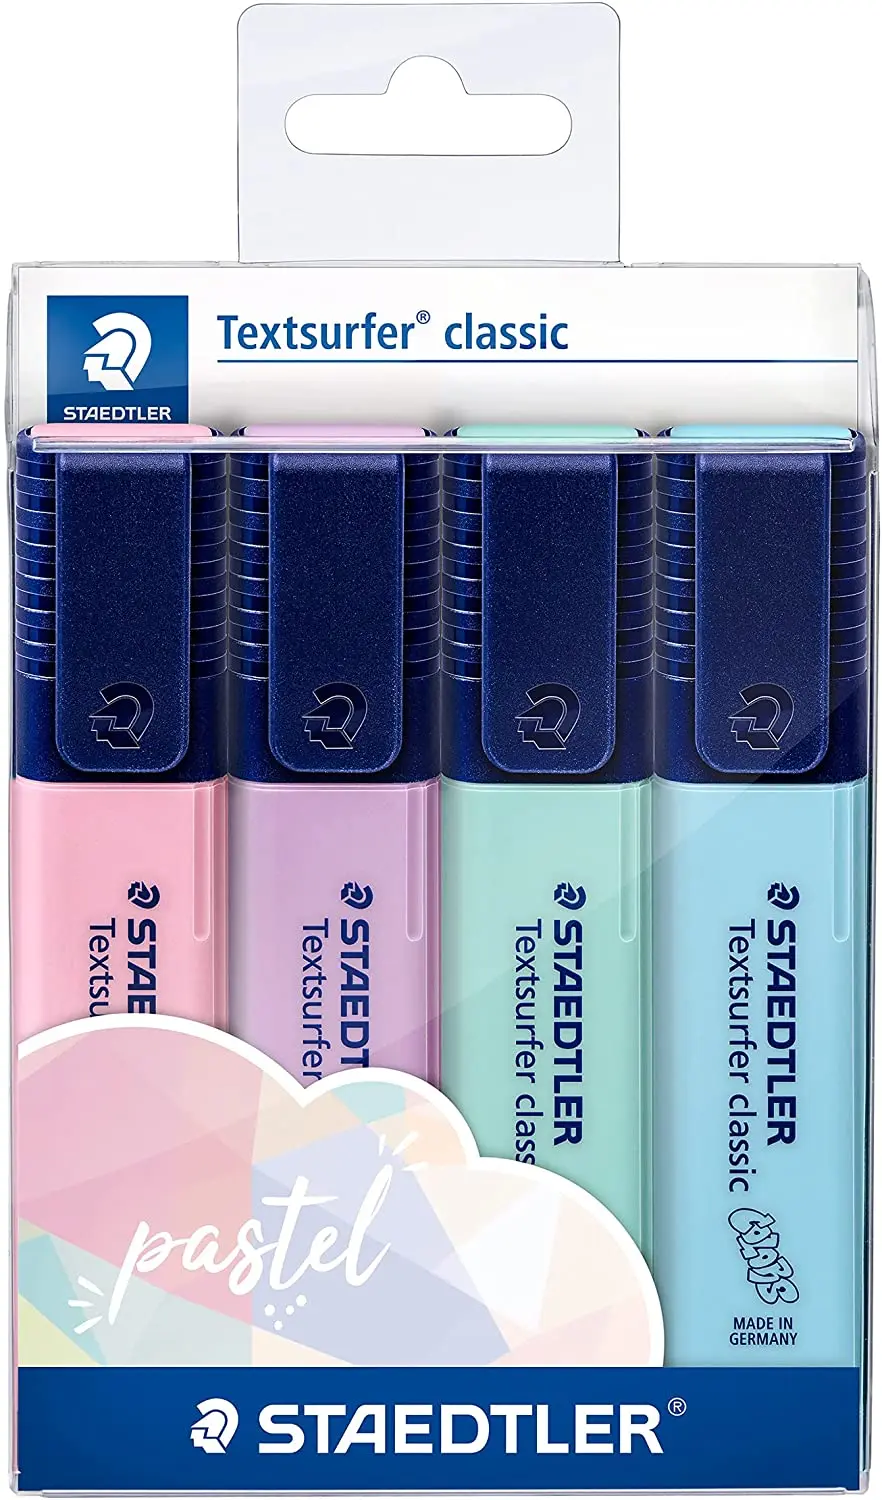 Staedtler Textsurfer Classic 364 Pack de 4 Marcadores Fluorescentes - Secado Rapido - Trazo 1 - 5mm 